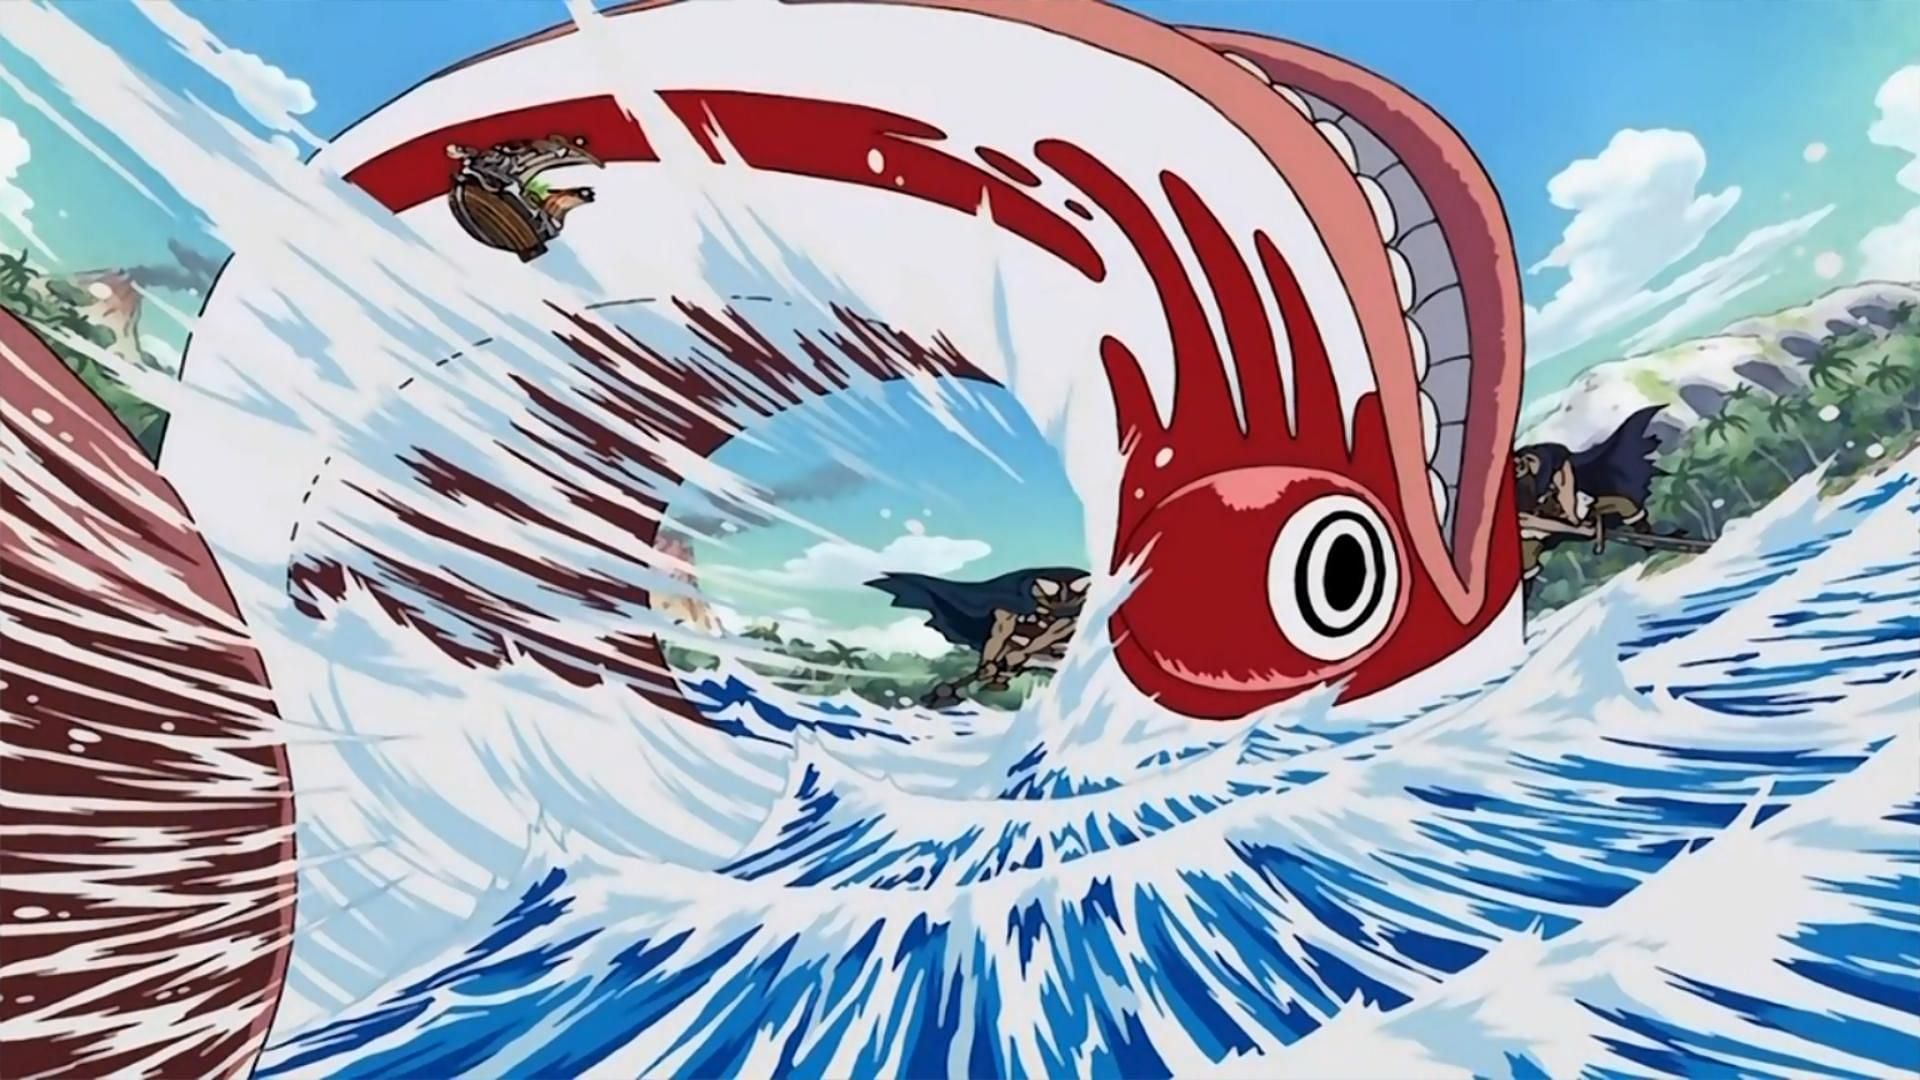 Dorry and Brogy using Hakoku in the One Piece anime (Image via Toei Animation)